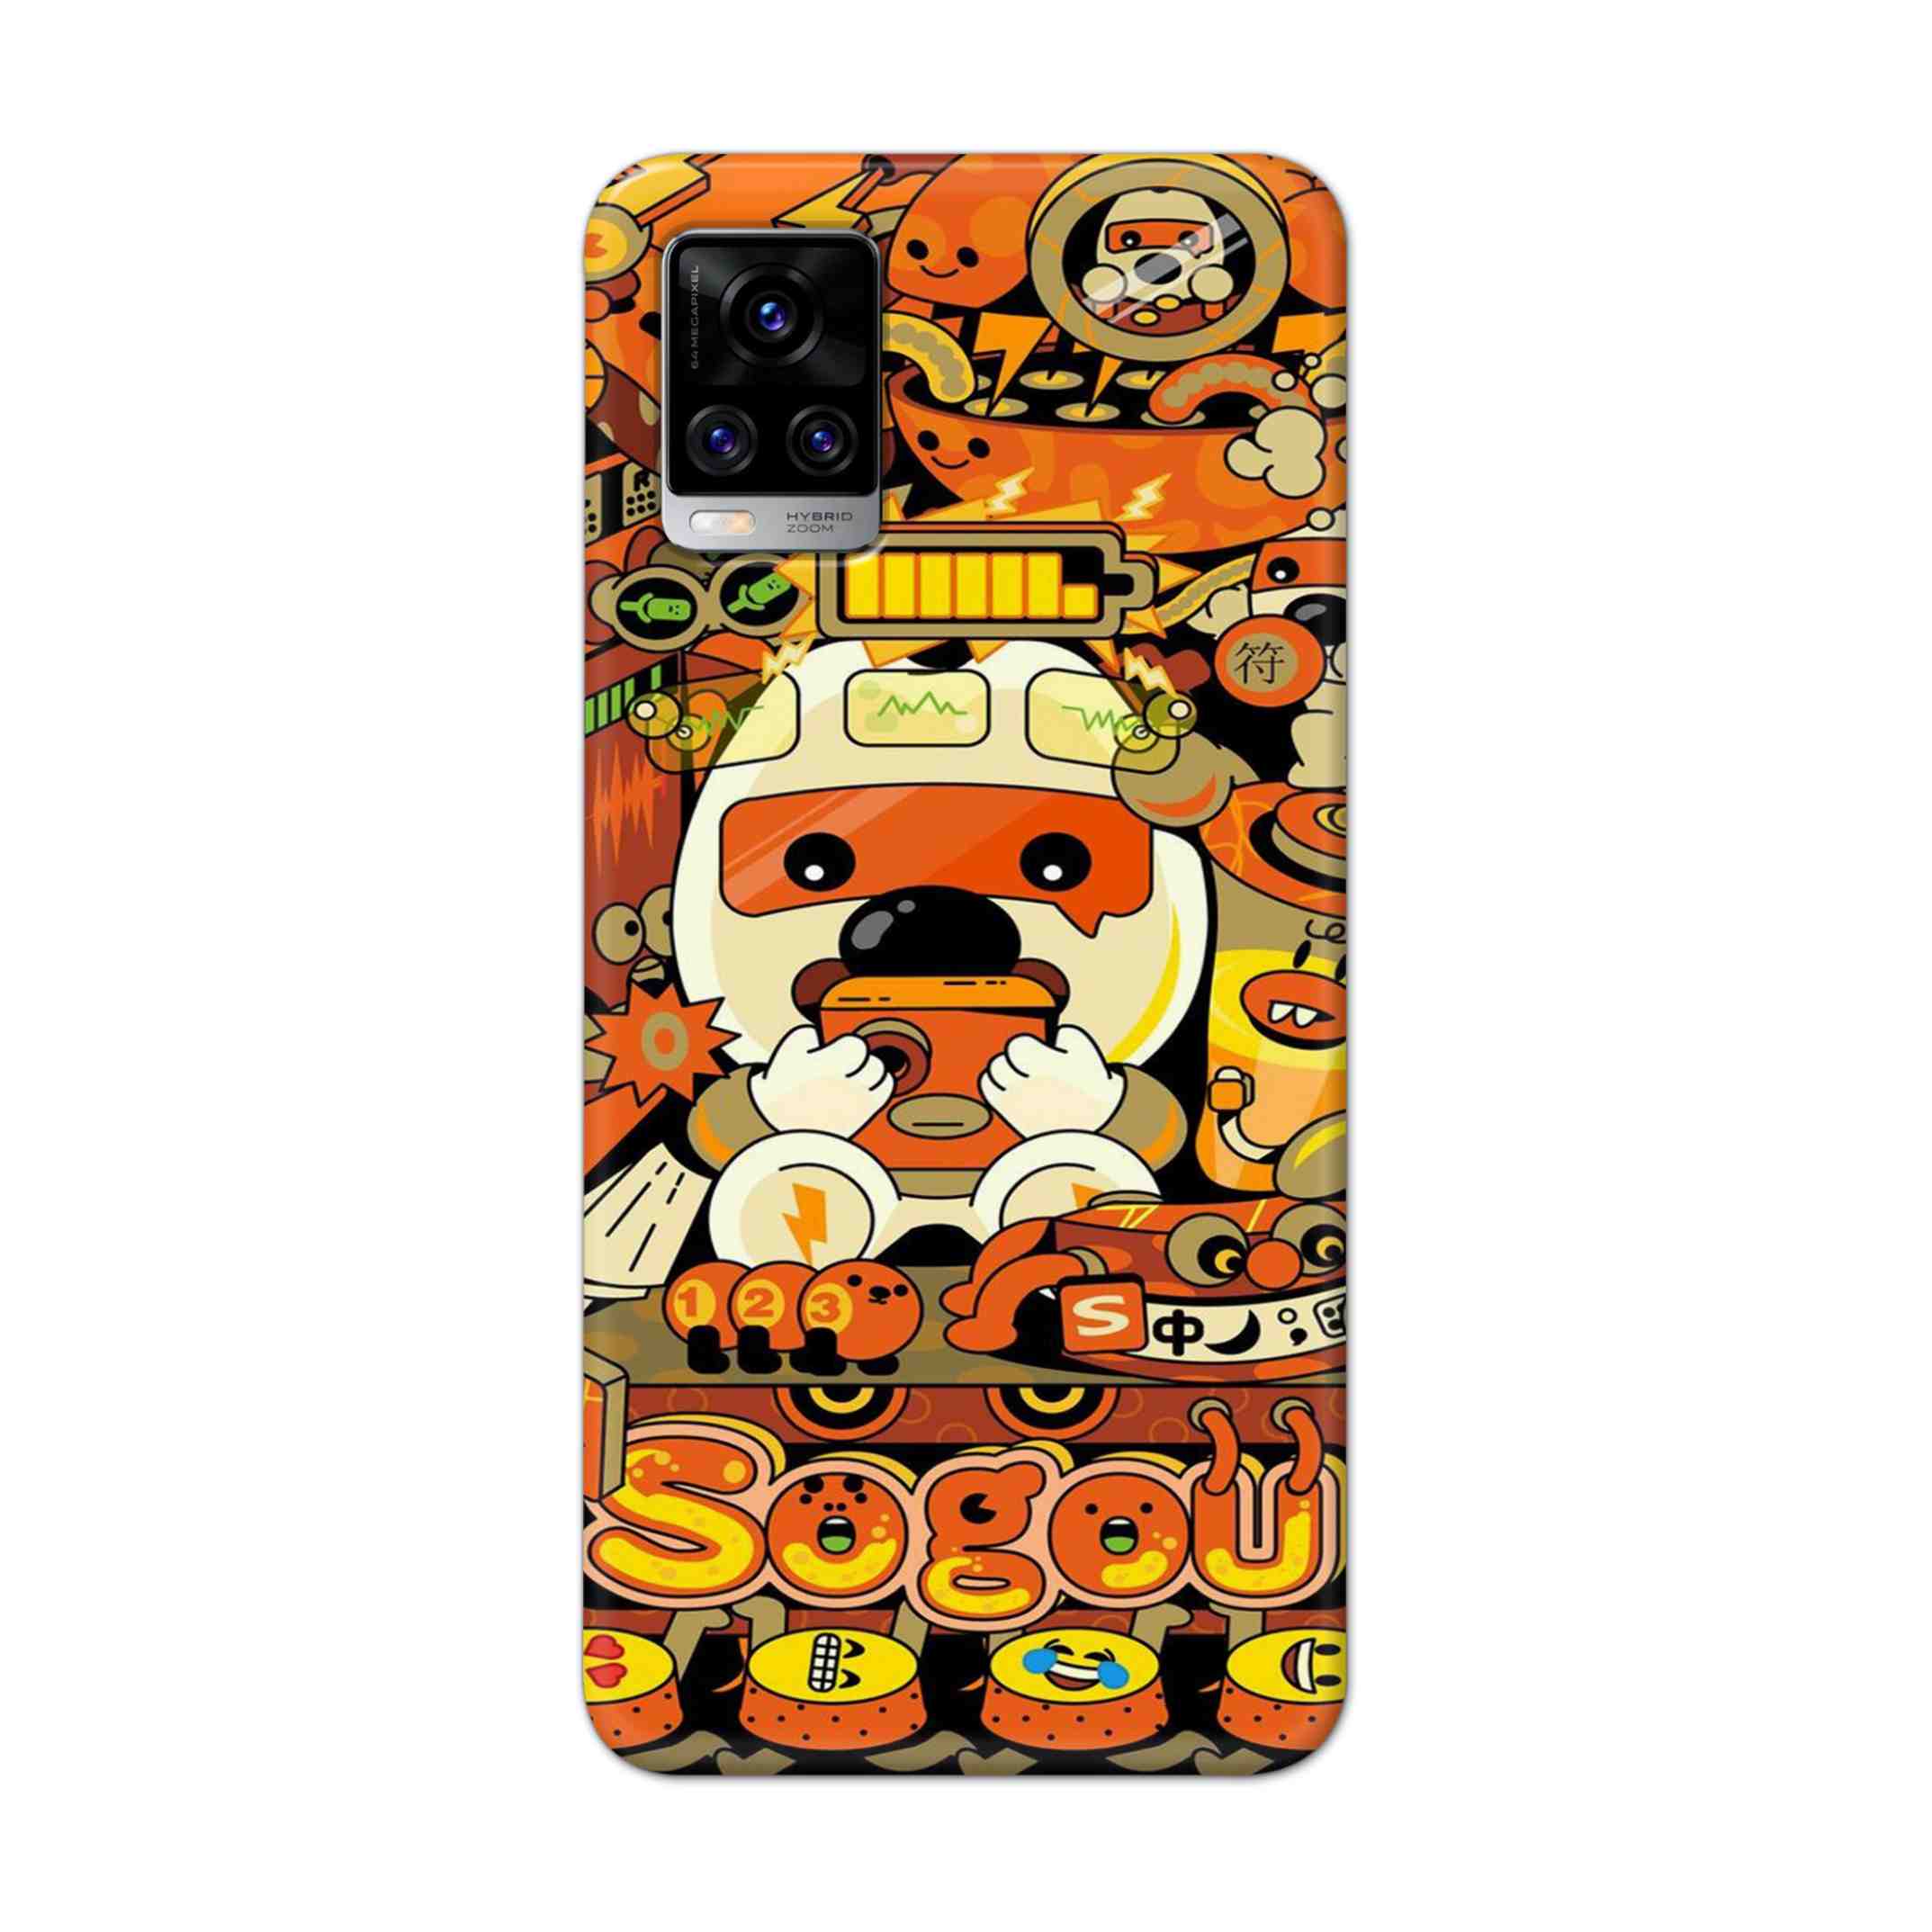 Buy Sogou Hard Back Mobile Phone Case Cover For Vivo V20 Pro Online